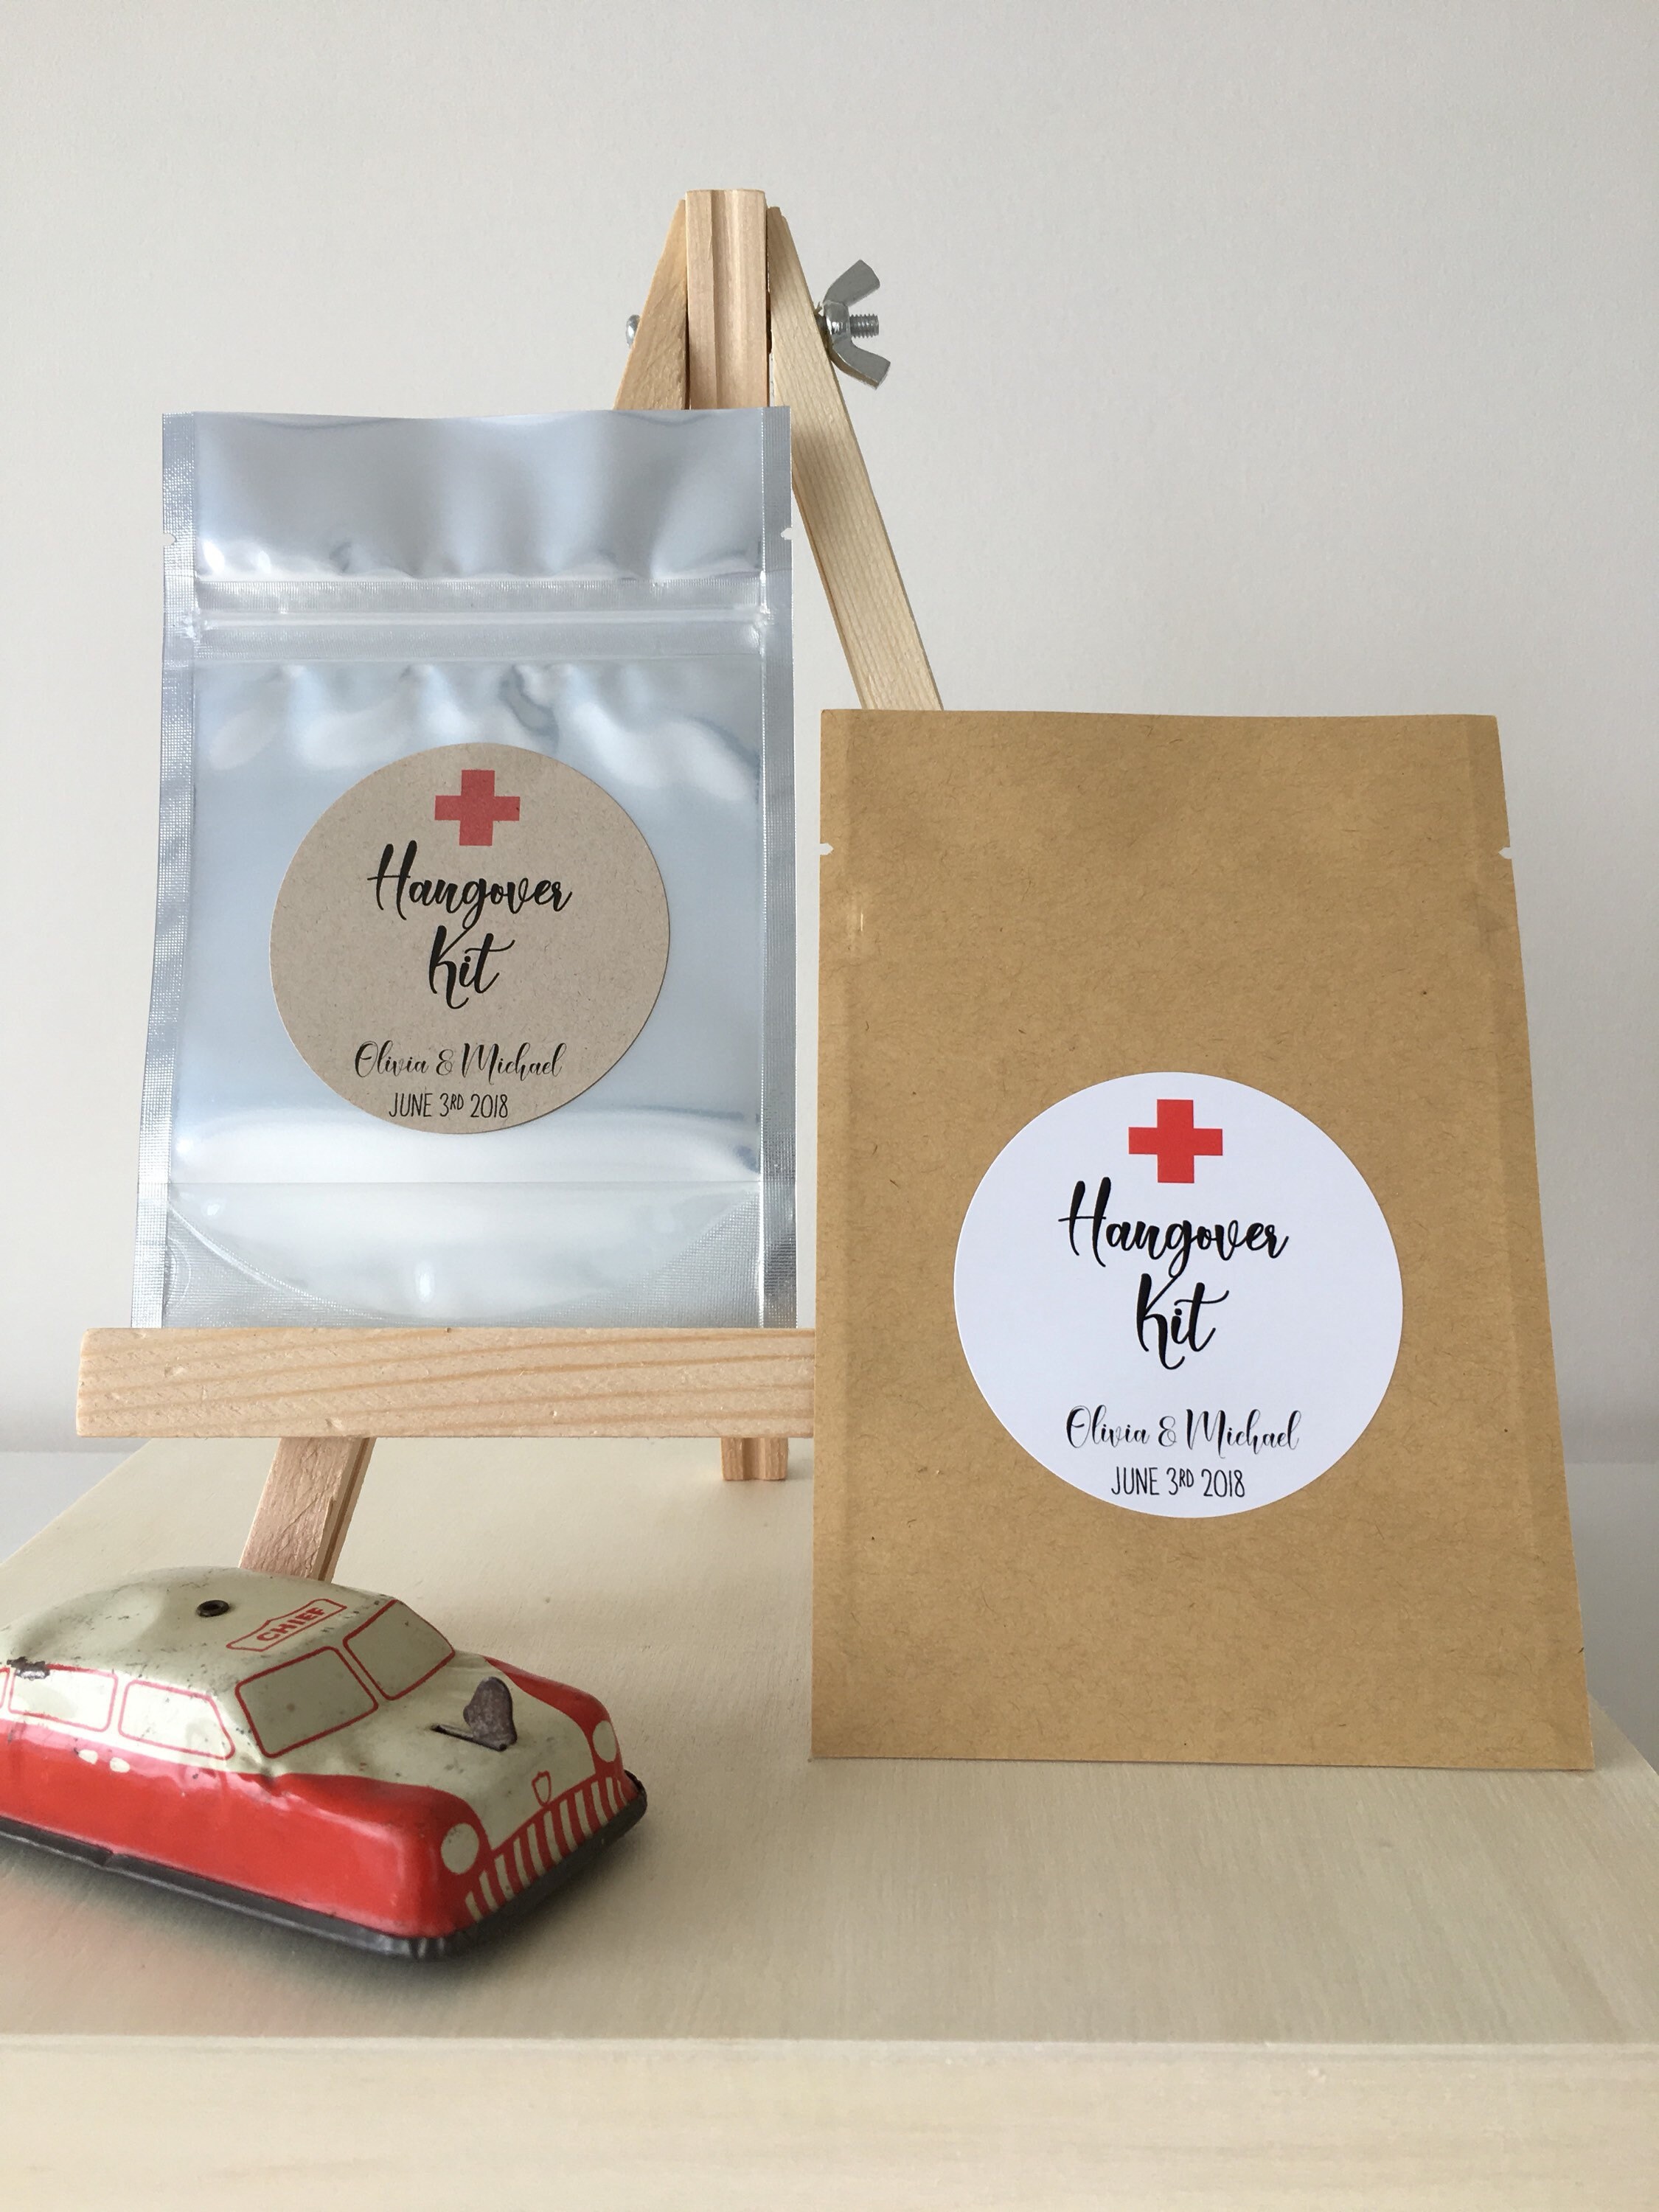 Hangover Kit! - (Set of 10) - Wedding Favor Treat Bags - Food Safe - 4 x 6  - Free Shipping!